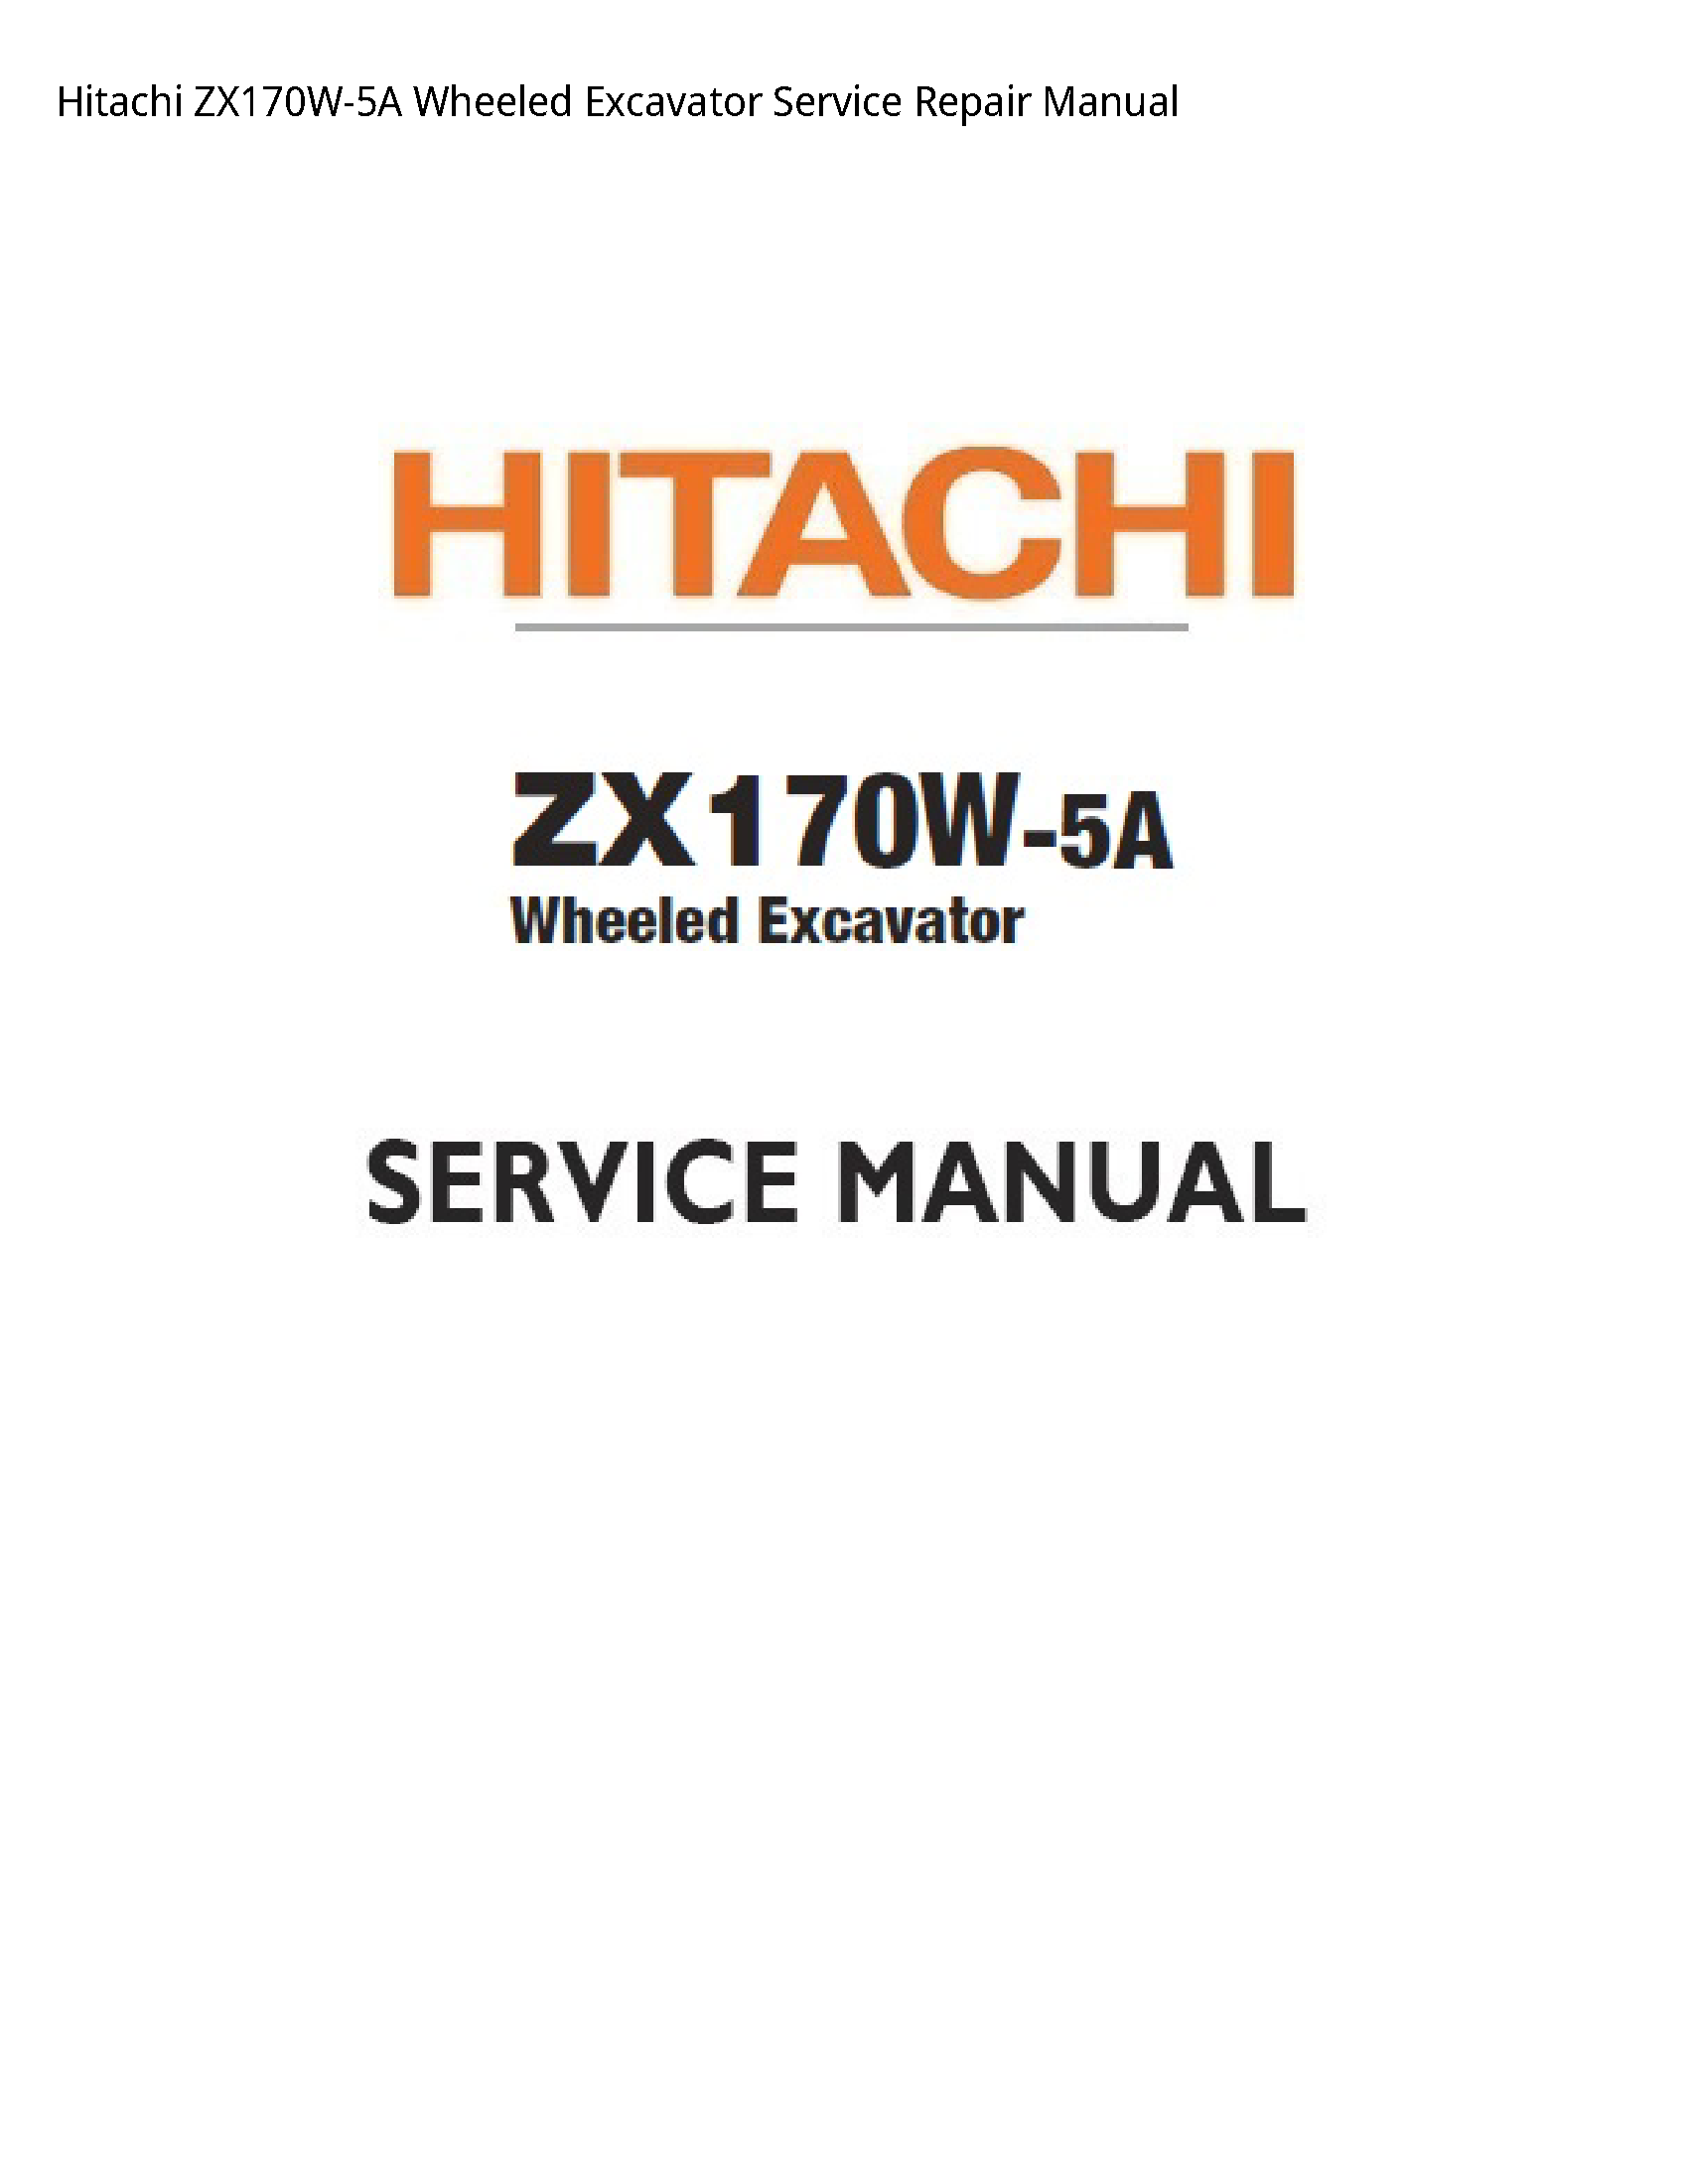 Hitachi ZX170W-5A Wheeled Excavator manual